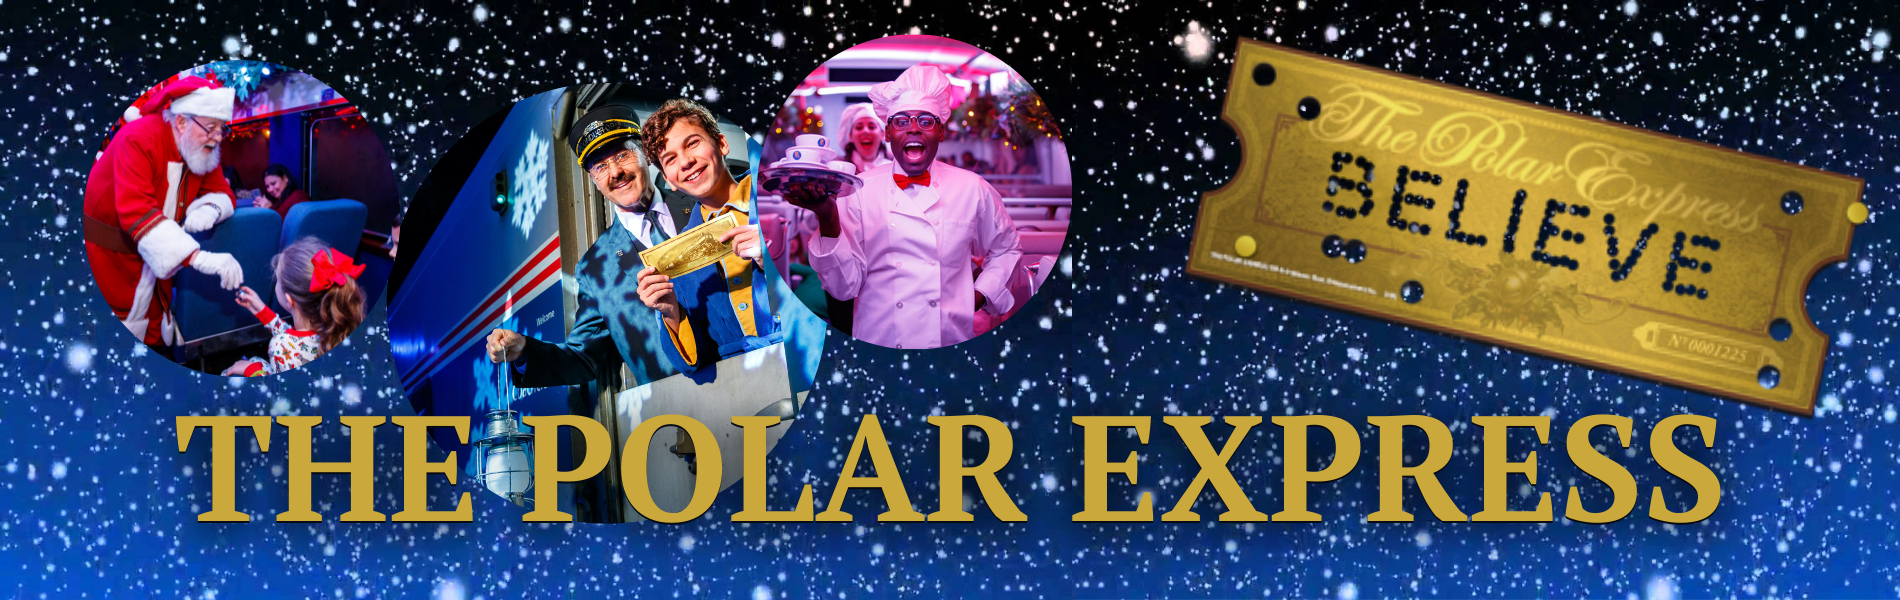 polar express real characters